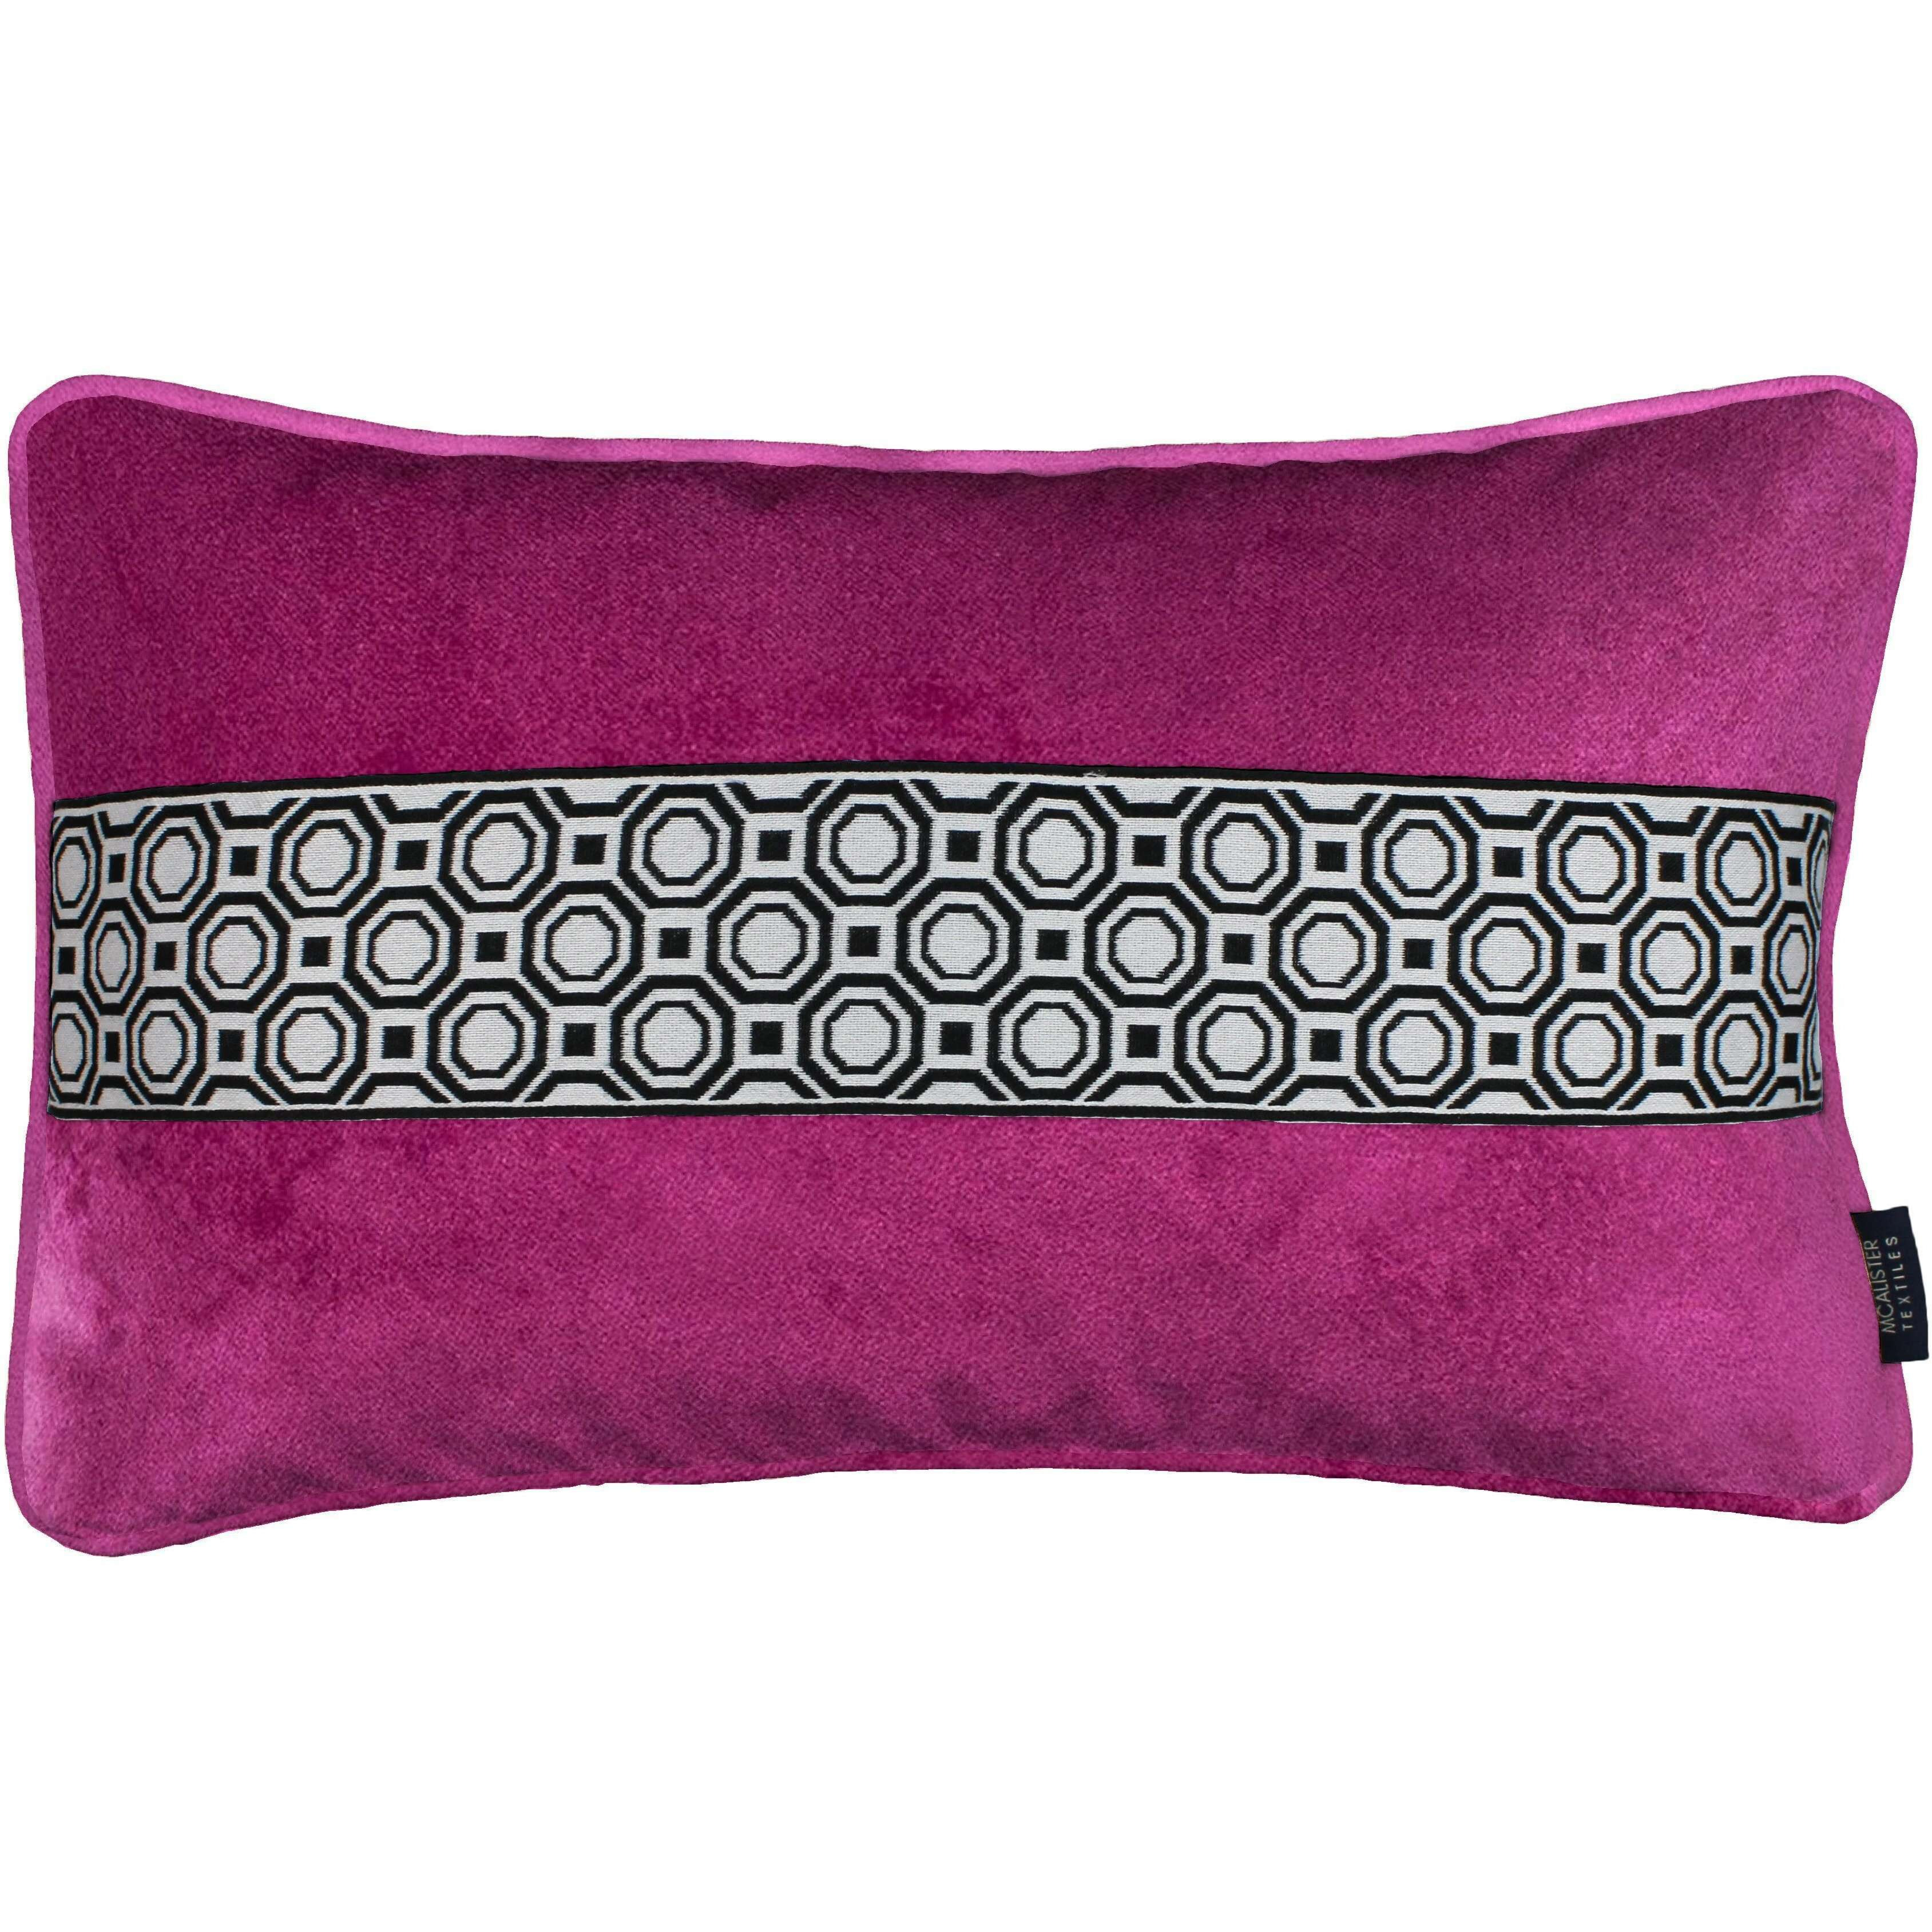 Cancun Striped Fuchsia Pink Velvet Pillow, Cover Only / 60cm x 40cm